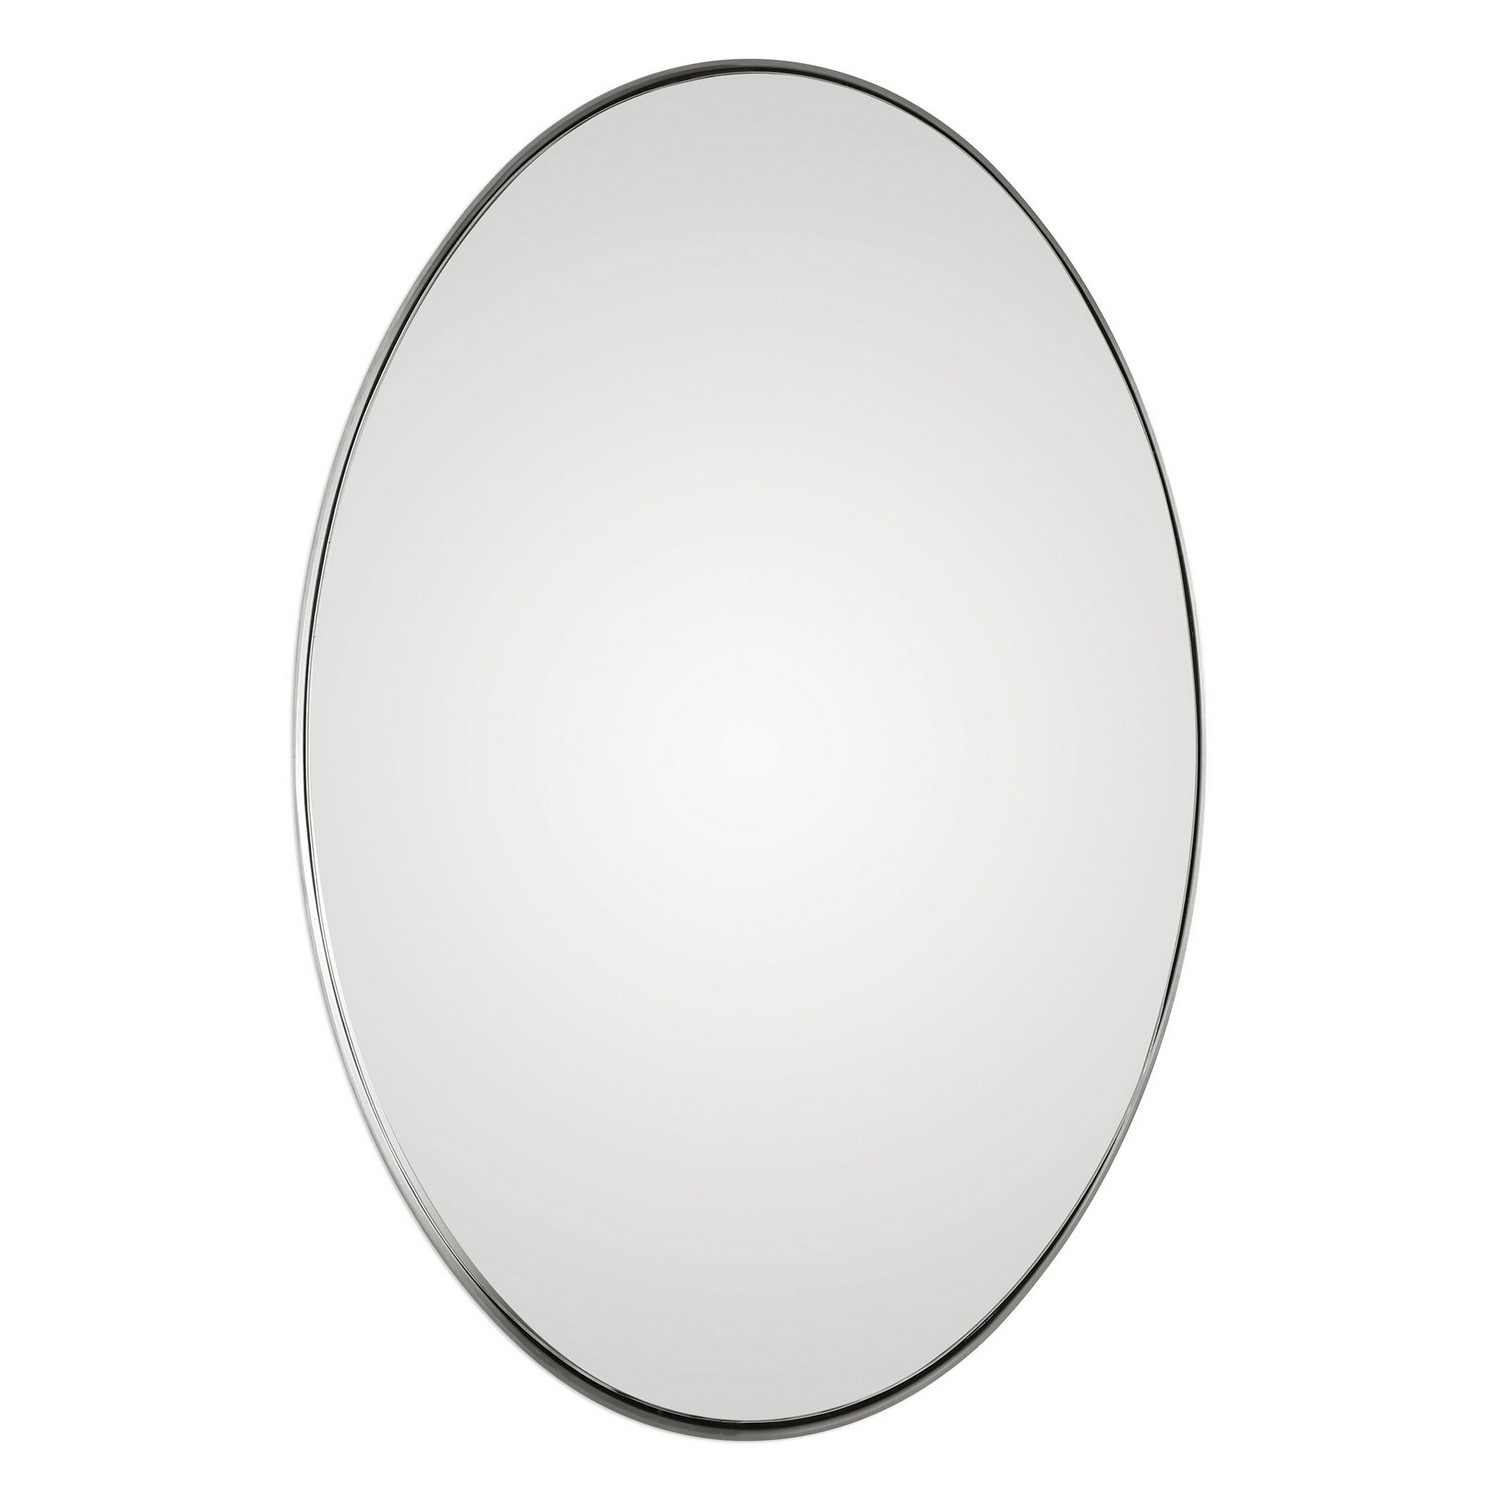 Uttermost Pursley Oval Mirror - Brushed Nickel